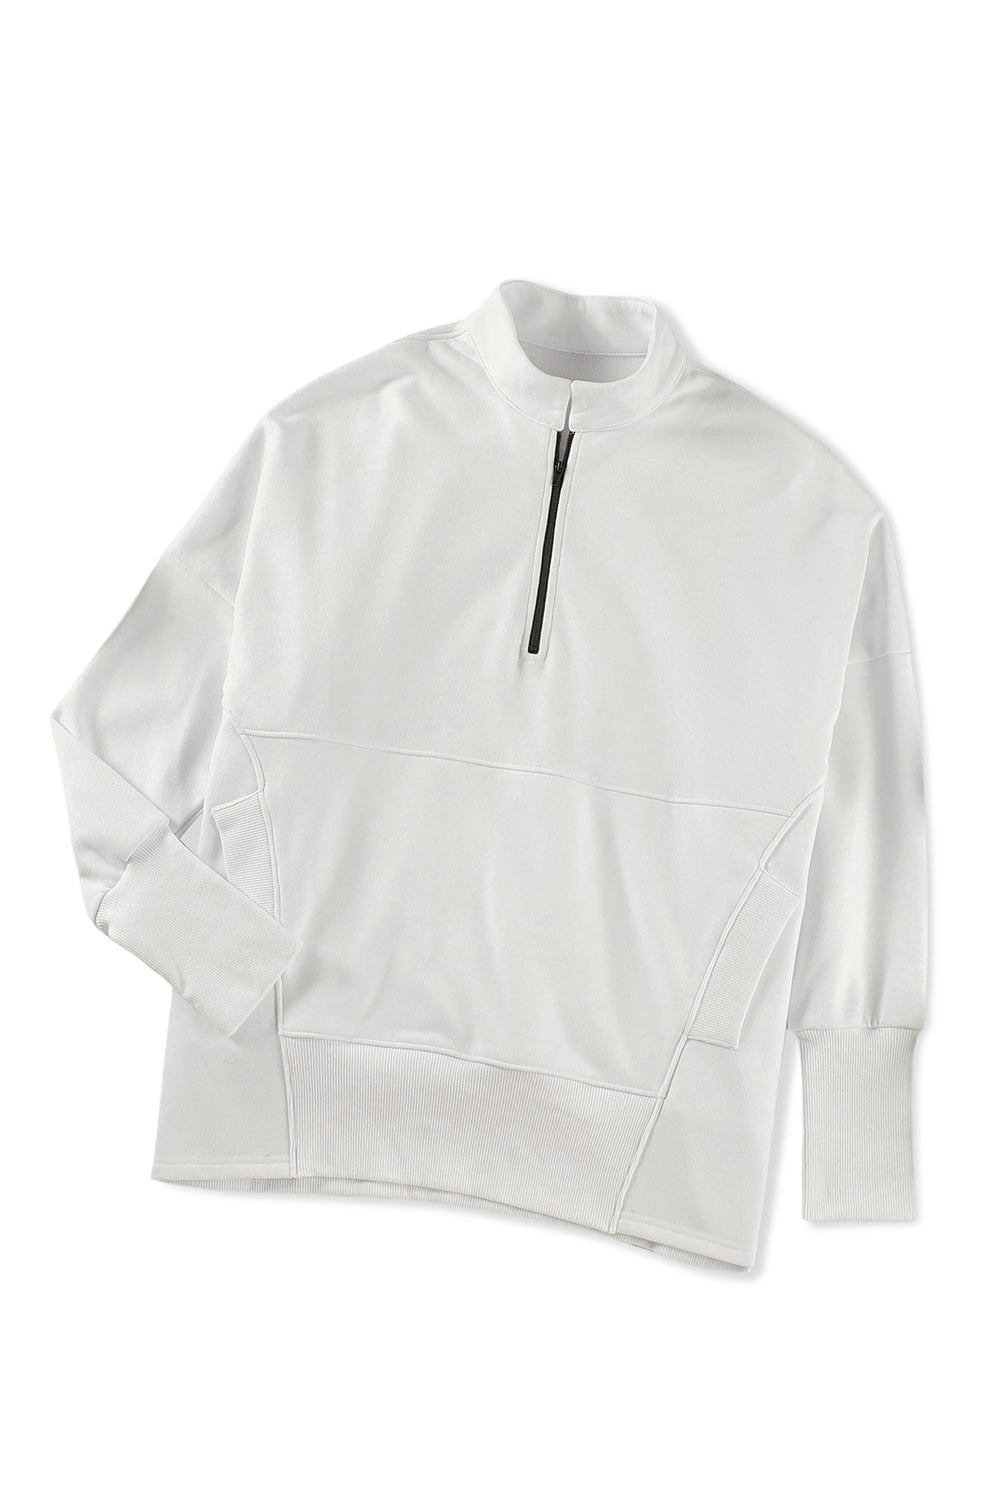 White Oversized Quarter-Zip Pullover Sweatshirt-13